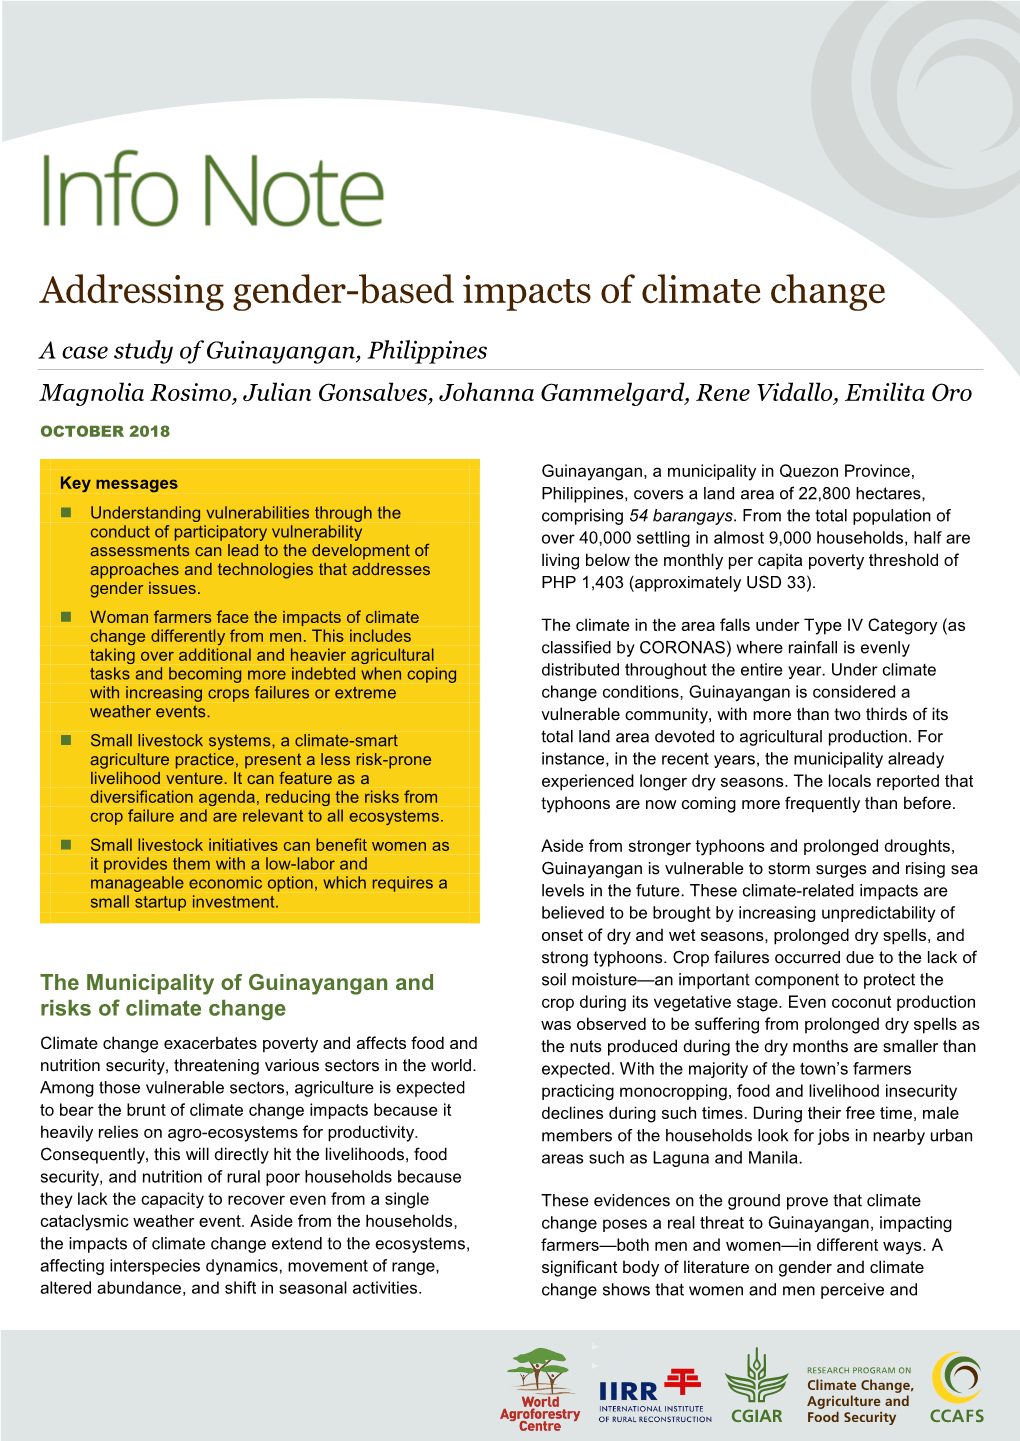 Addressing Gender-Based Impacts of Climate Change